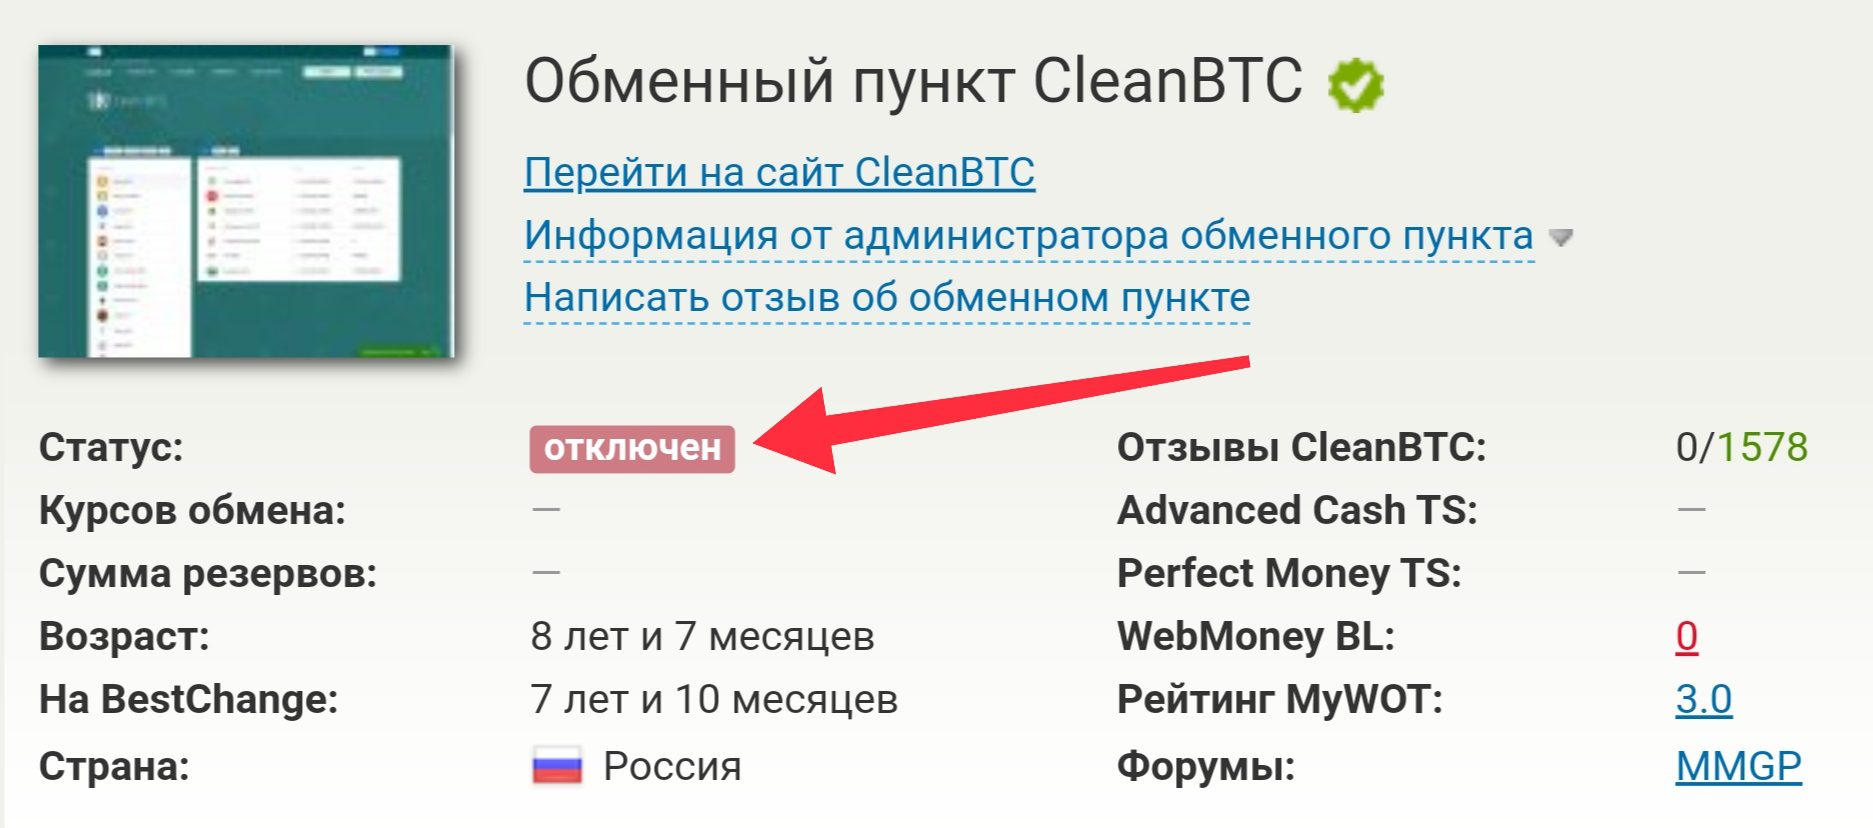 Cleanbtc отзывы